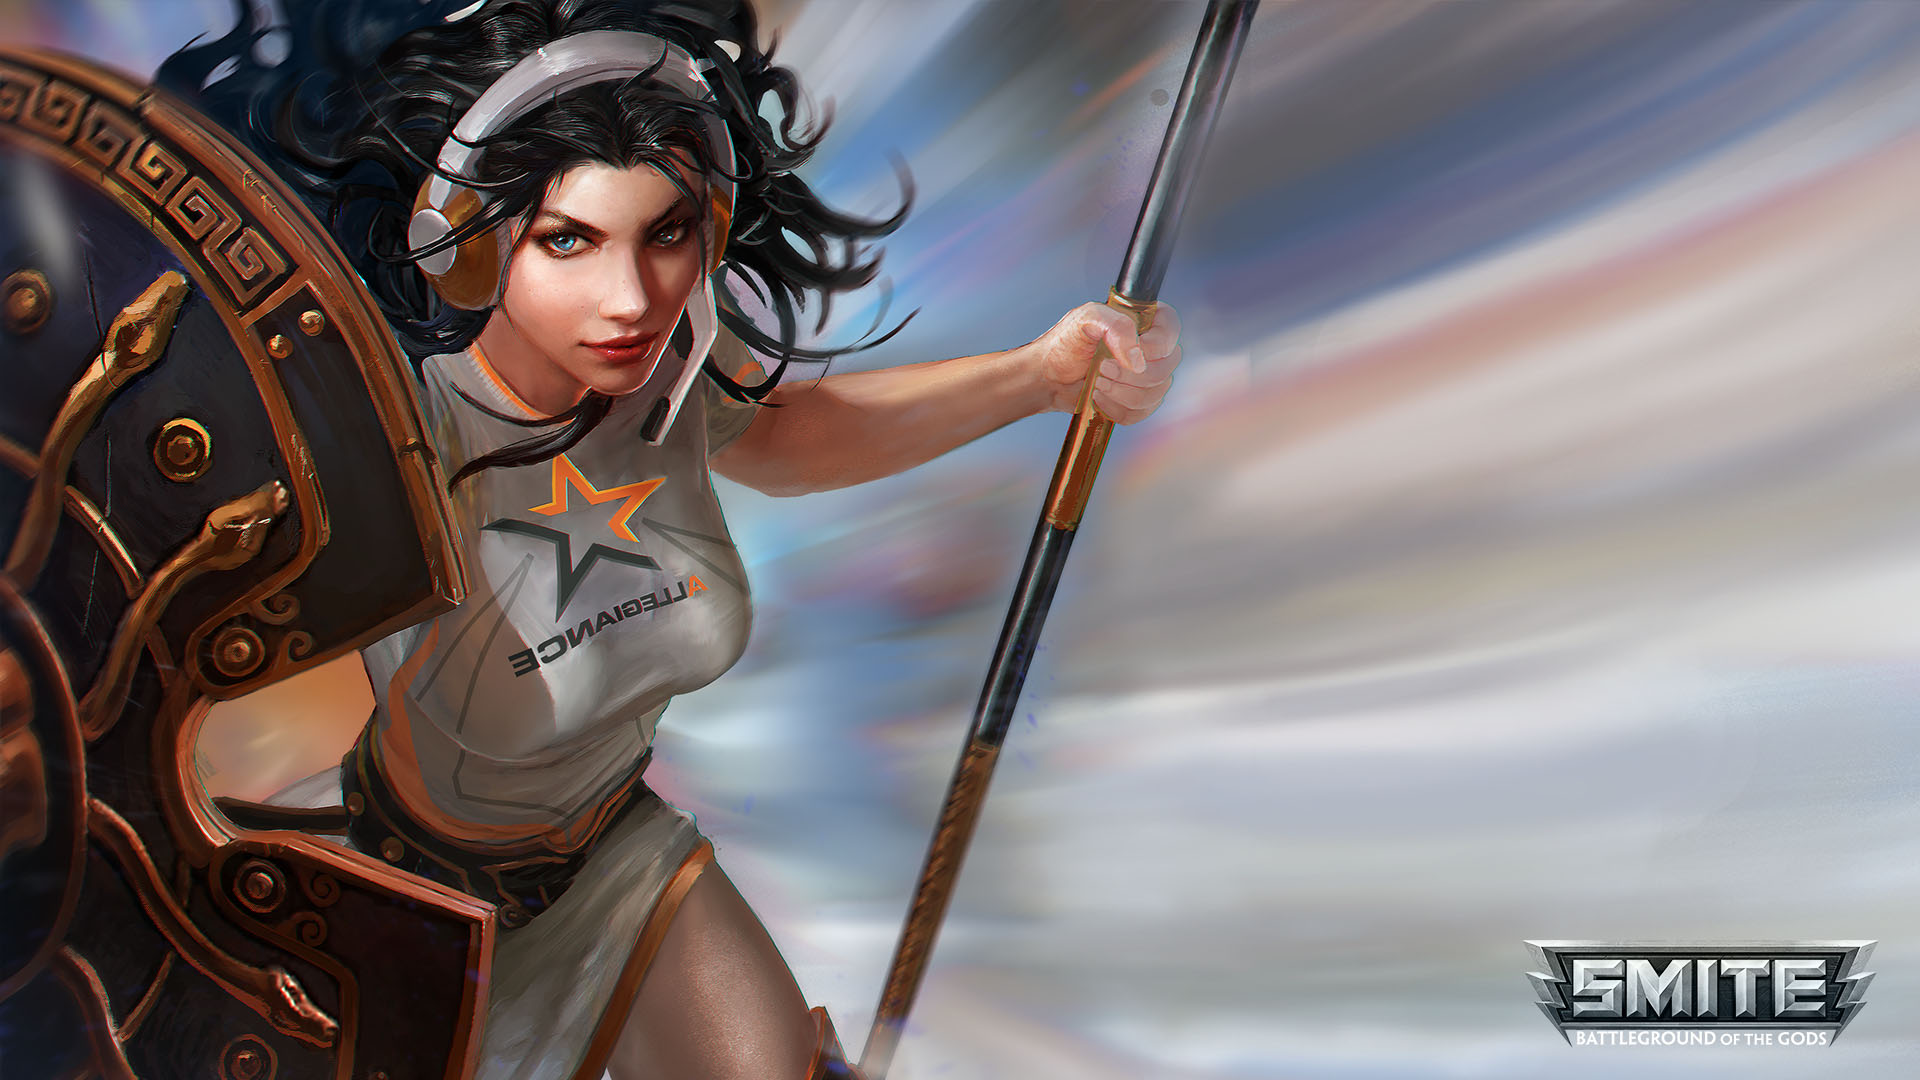 Wallpaper Athena, Smite online game, girl warrior